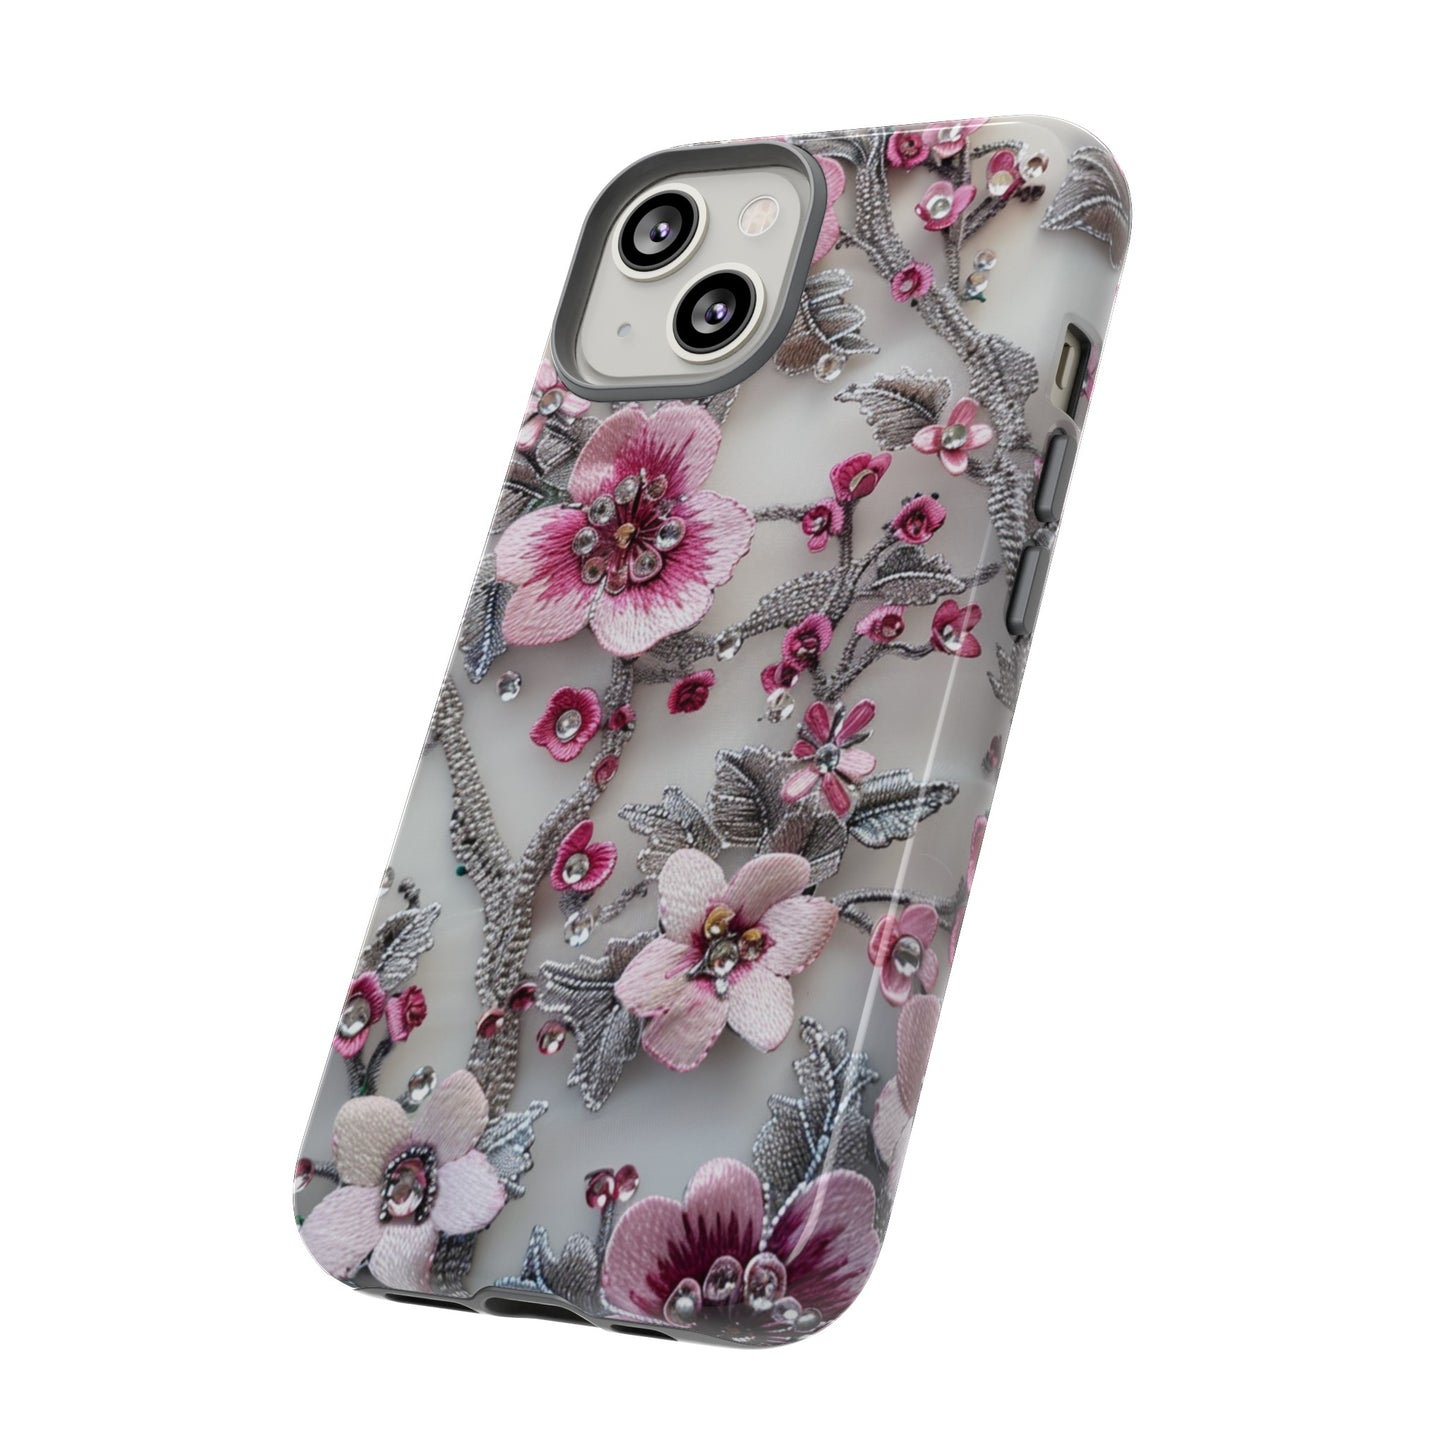 Coquette Aesthetic Floral Art iPhone 12 Case